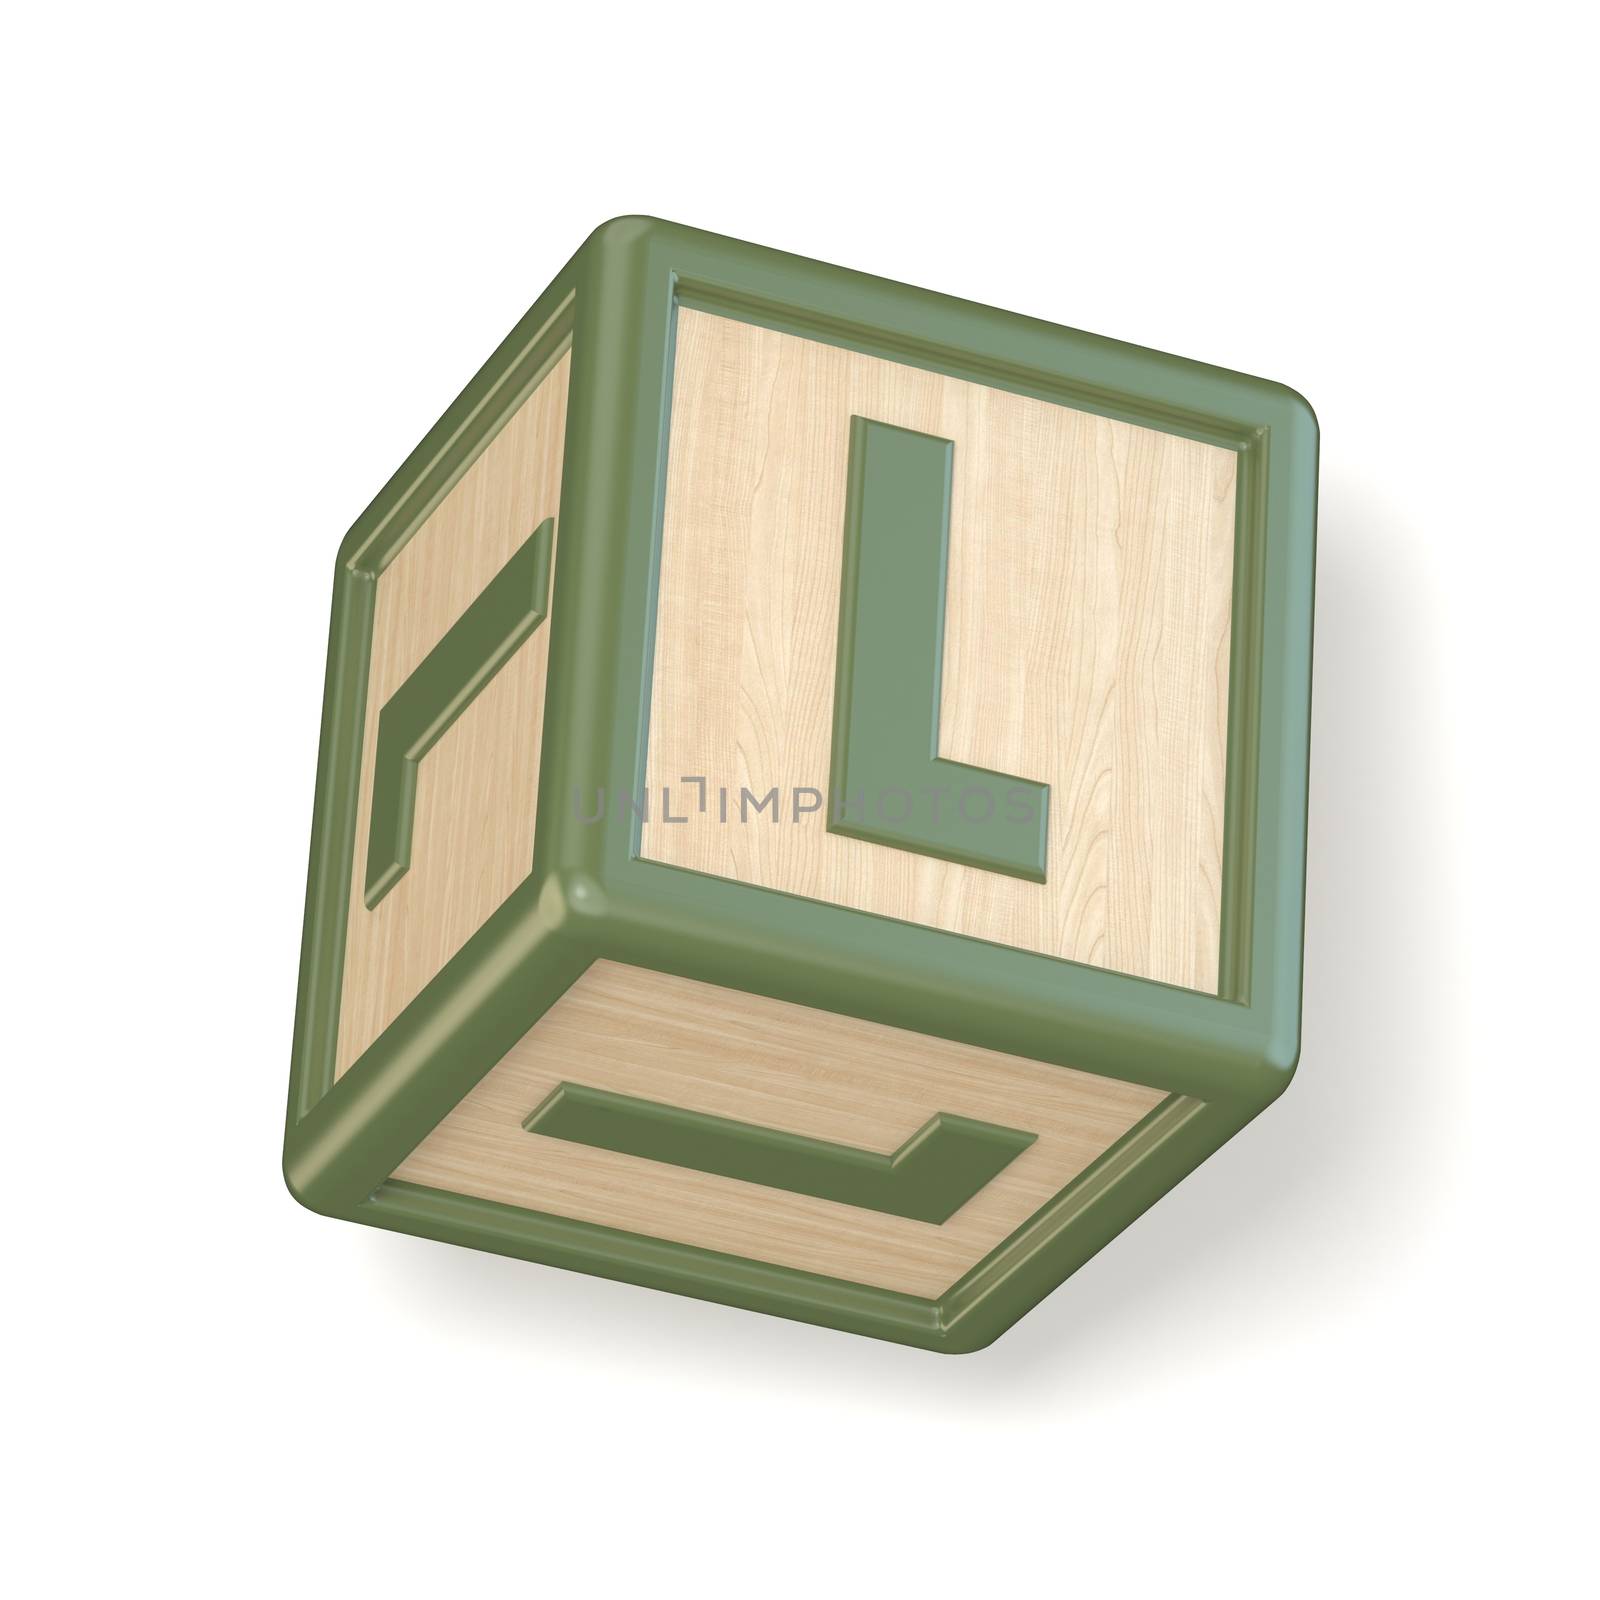 Letter L wooden alphabet blocks font rotated. 3D render illustration isolated on white background